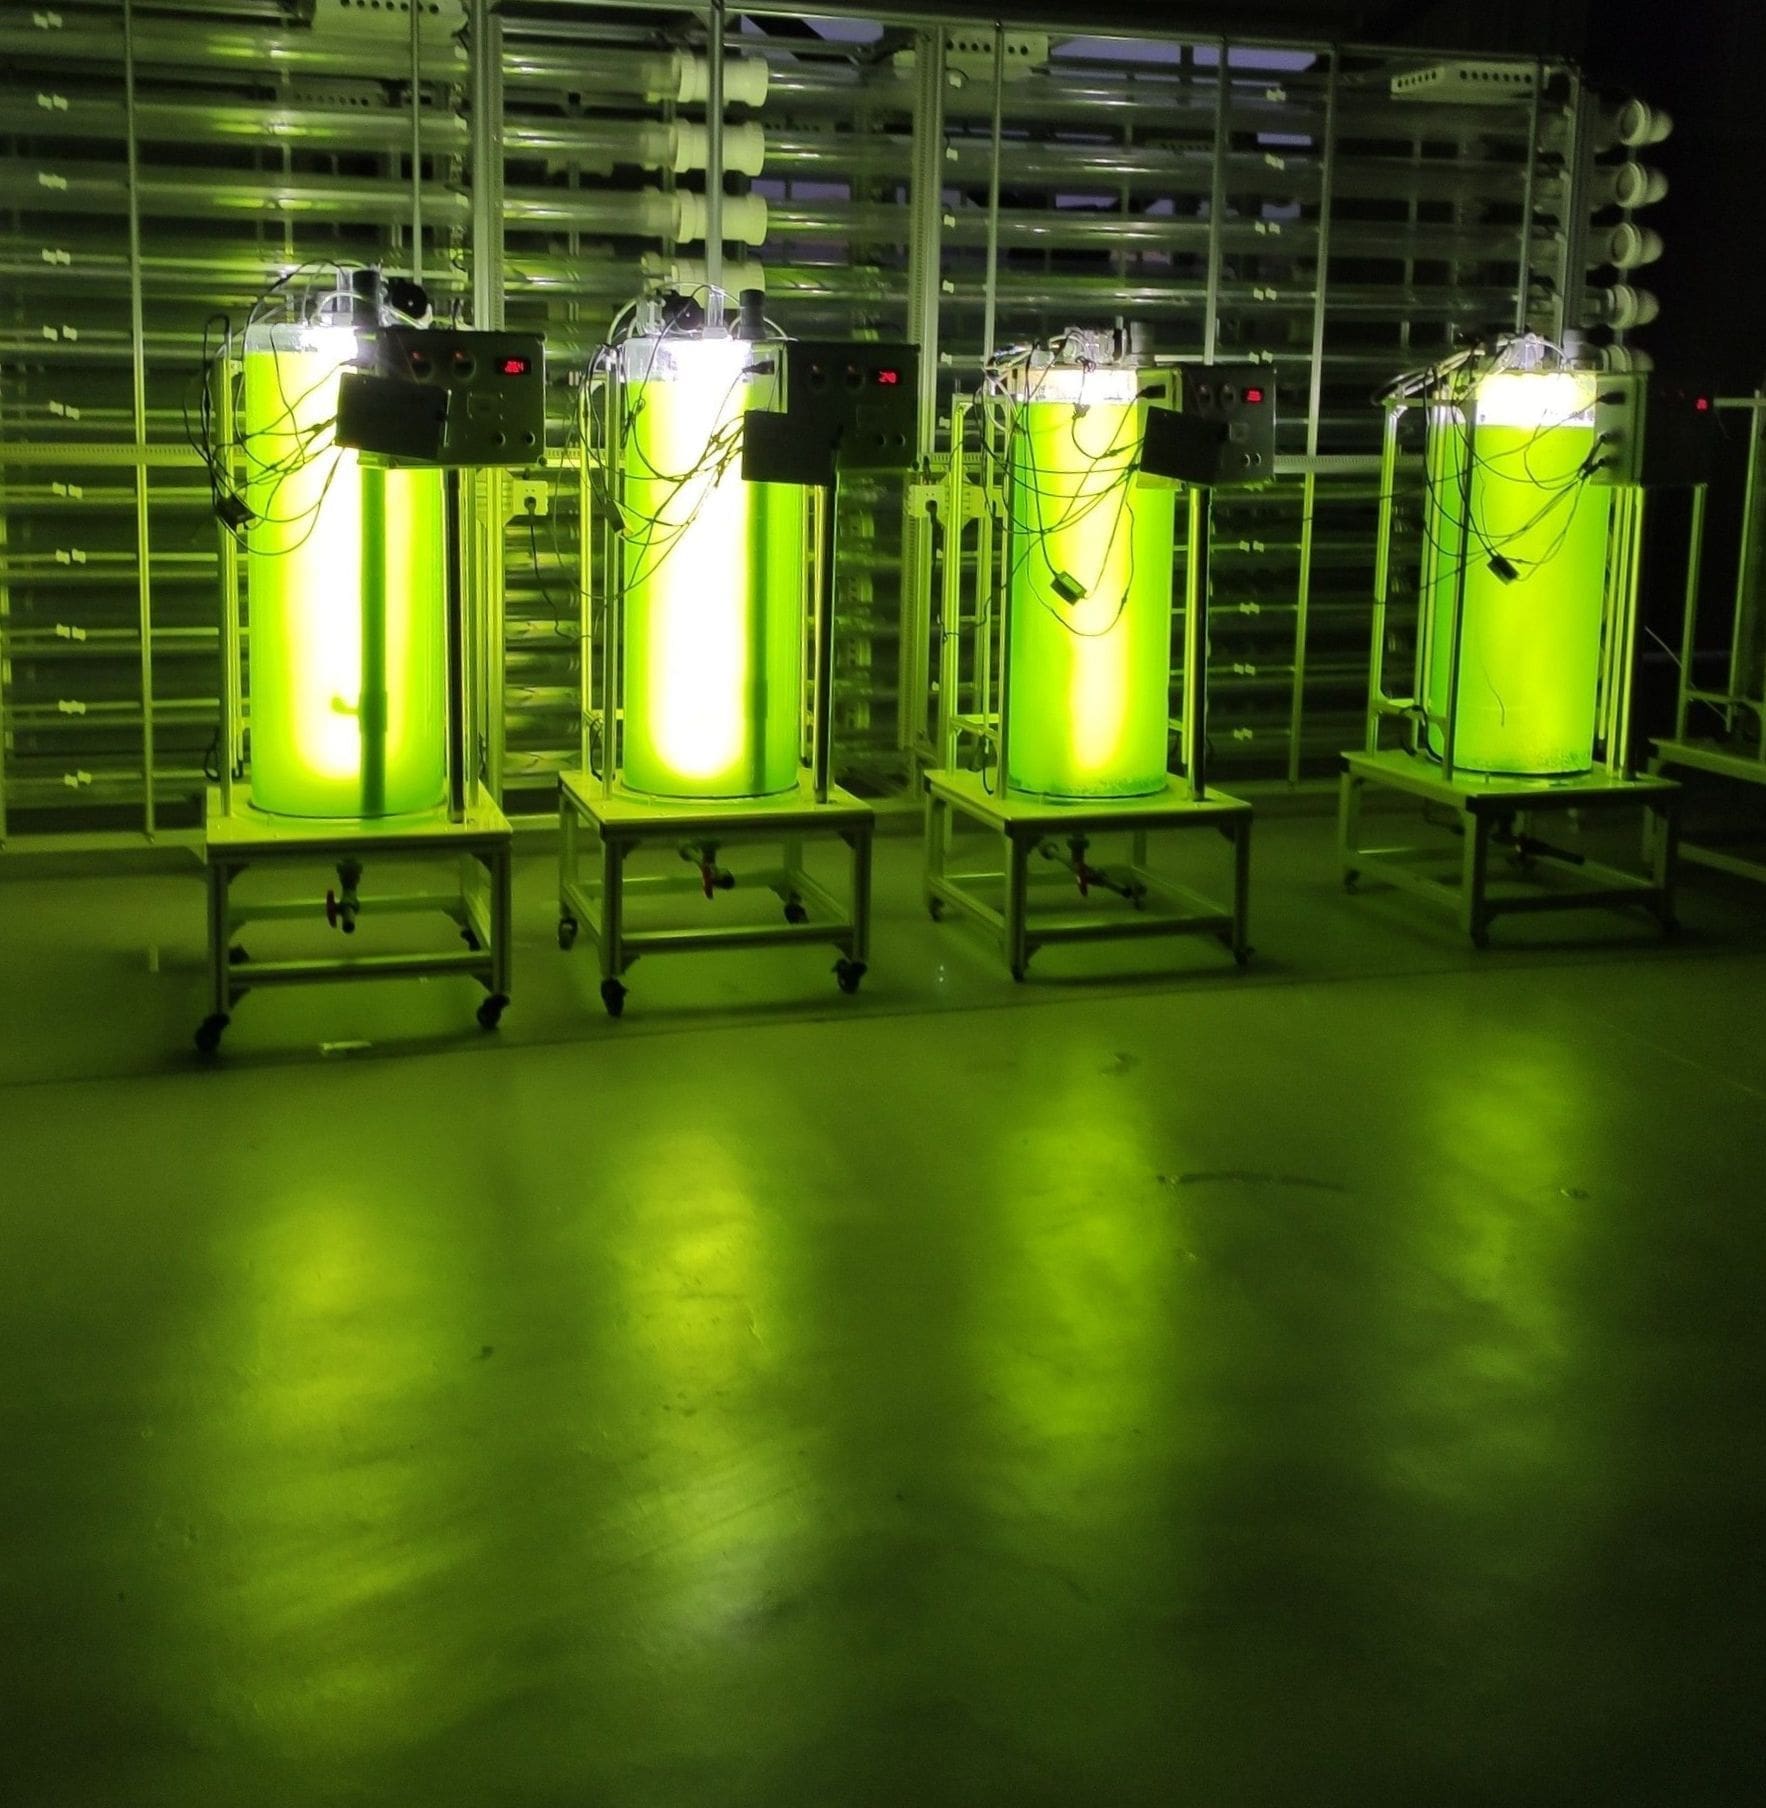 Microalgae Photobioreactor for Biology STEM Education or Home Cultivation of Fresh Water Microalgae